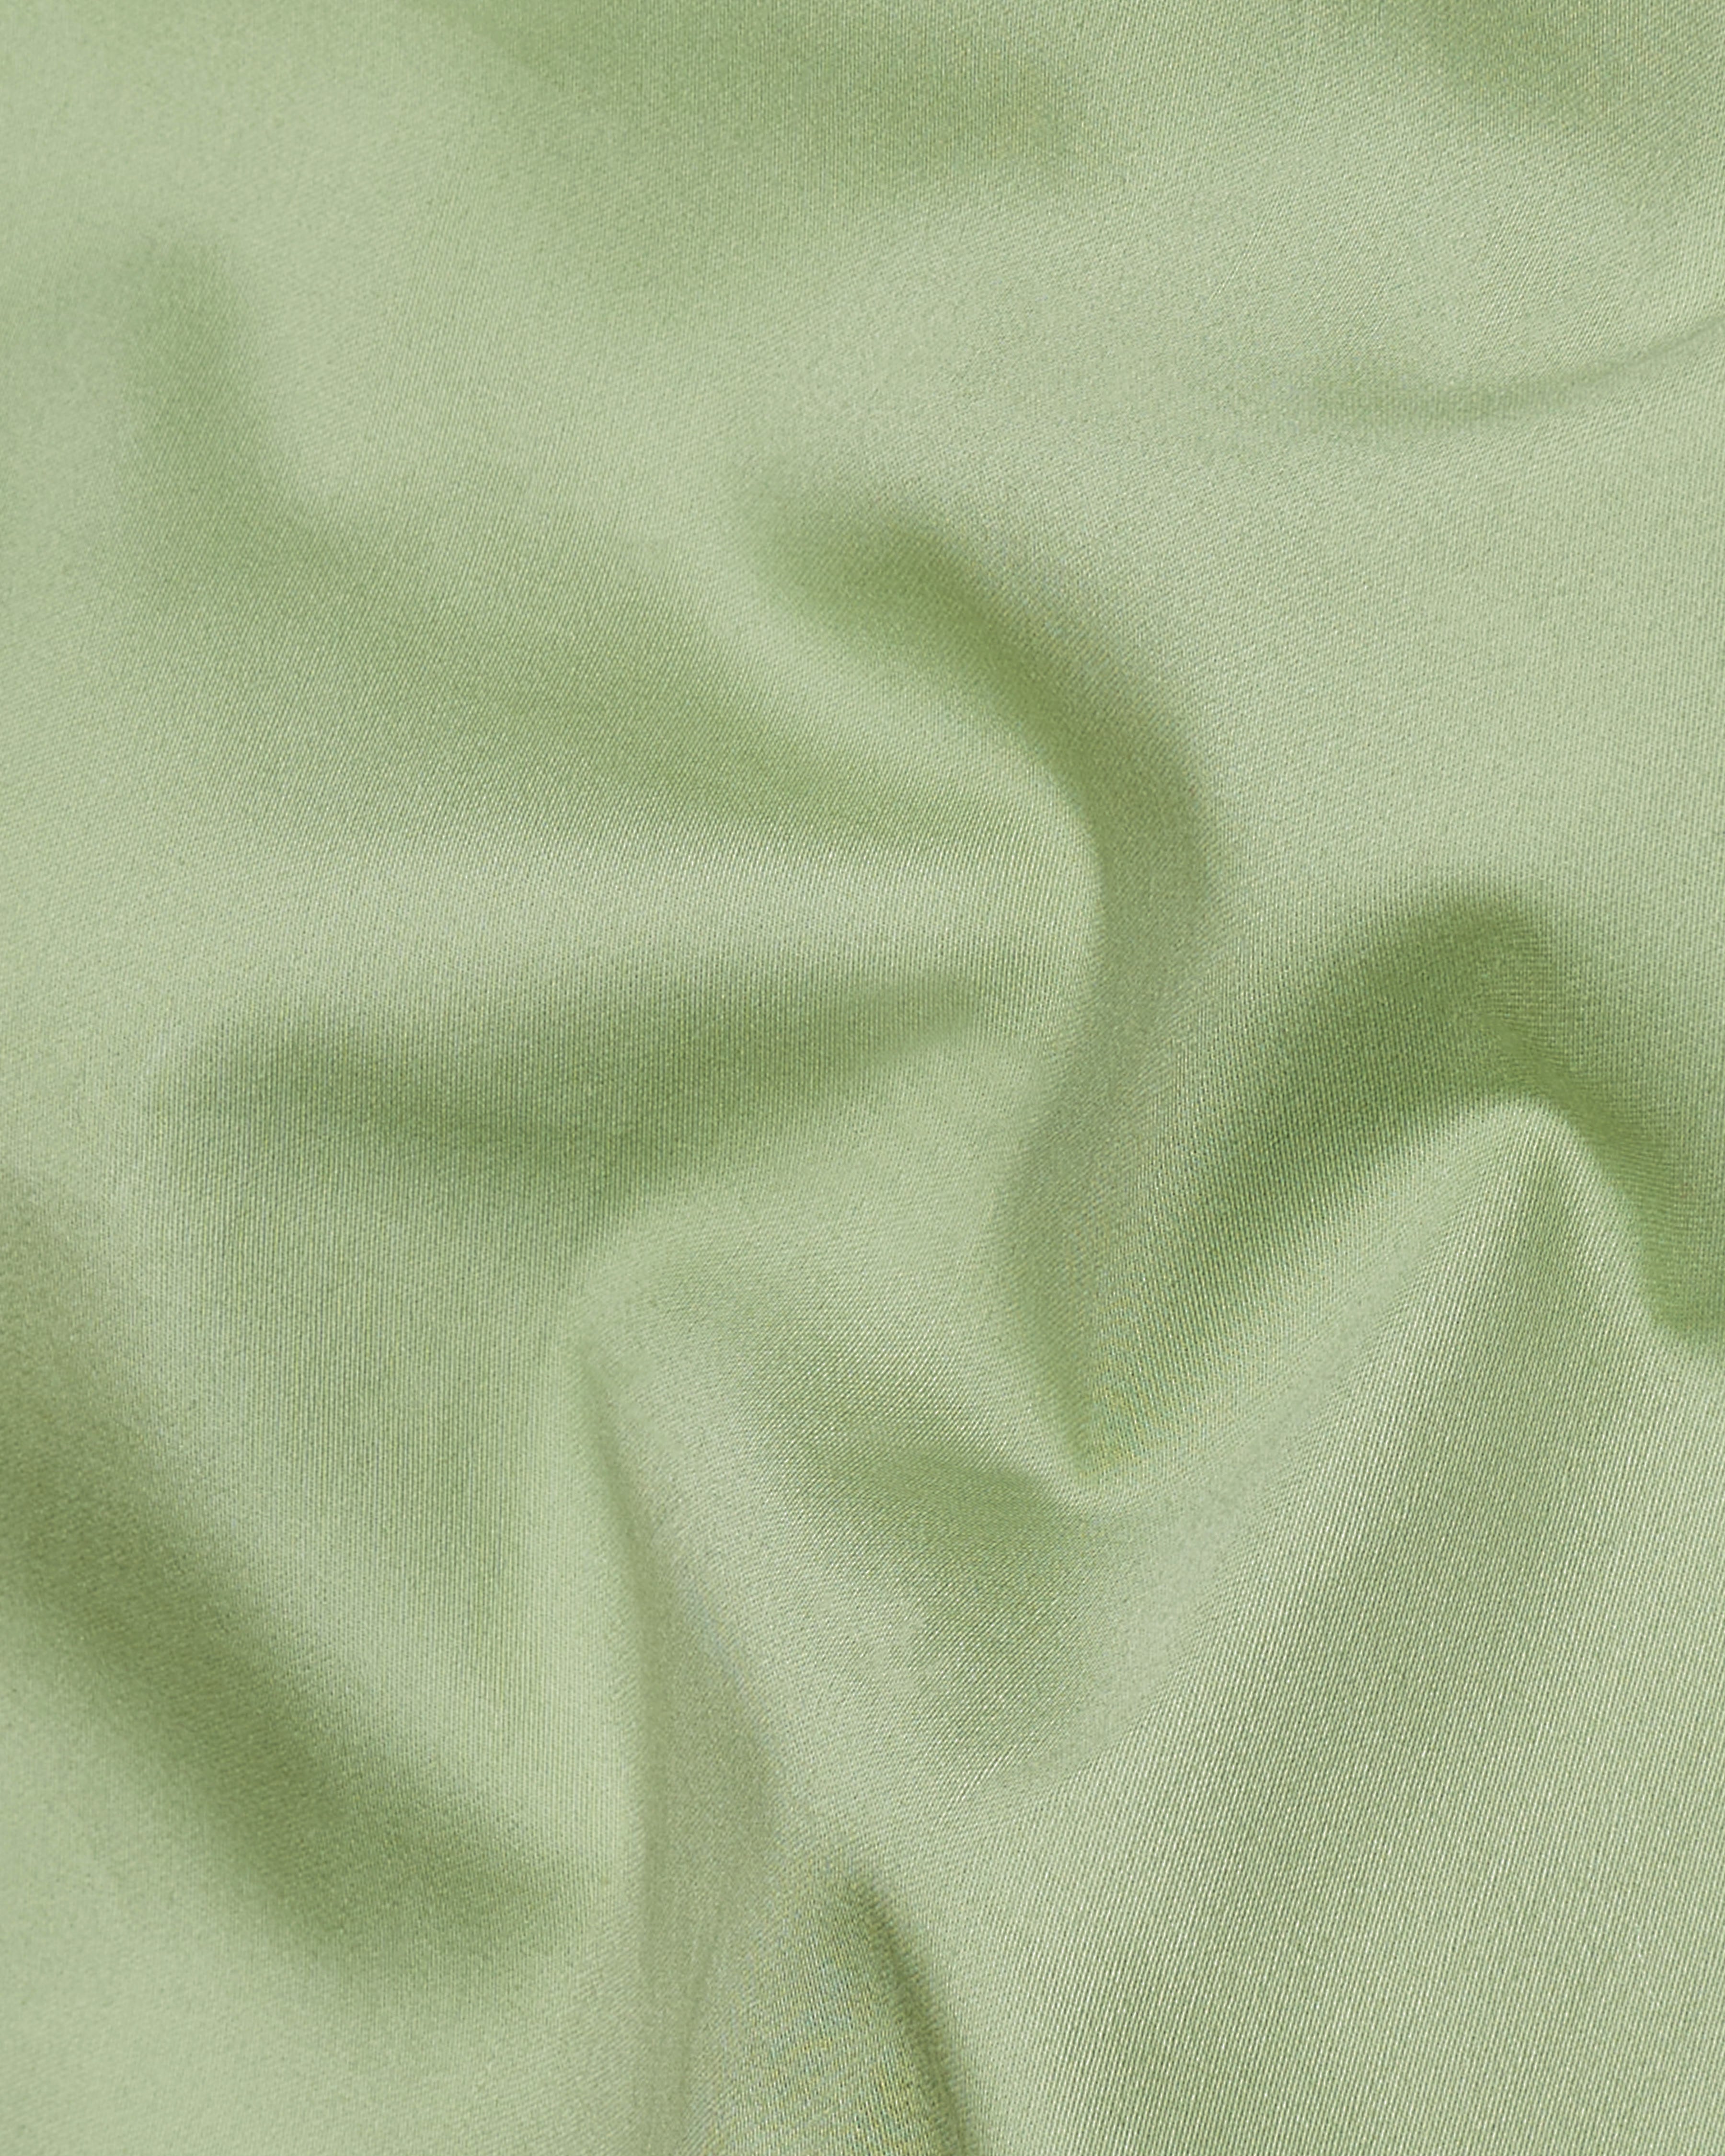 Swamp Green Super Soft Premium Cotton Shirt 8887-BLK-38, 8887-BLK-H-38,  8887-BLK-39,  8887-BLK-H-39,  8887-BLK-40,  8887-BLK-H-40,  8887-BLK-42,  8887-BLK-H-42,  8887-BLK-44,  8887-BLK-H-44,  8887-BLK-46,  8887-BLK-H-46,  8887-BLK-48,  8887-BLK-H-48,  8887-BLK-50,  8887-BLK-H-50,  8887-BLK-52,  8887-BLK-H-52